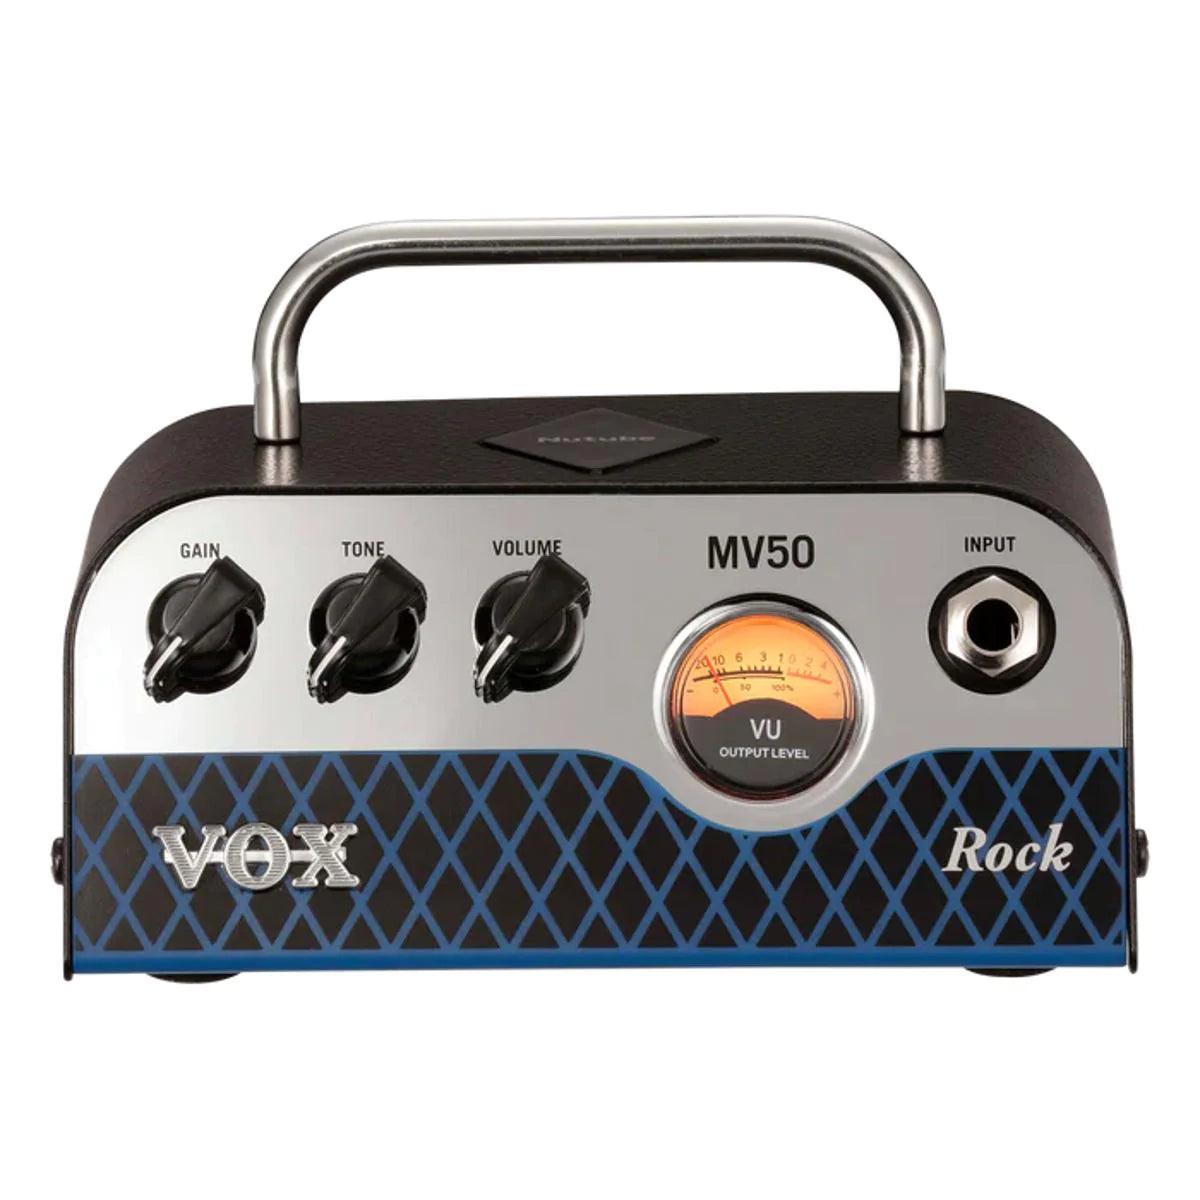 Vox MV50 Classic Rock Mini Amp Head - Guitars - Amplifiers by VOX at Muso's Stuff